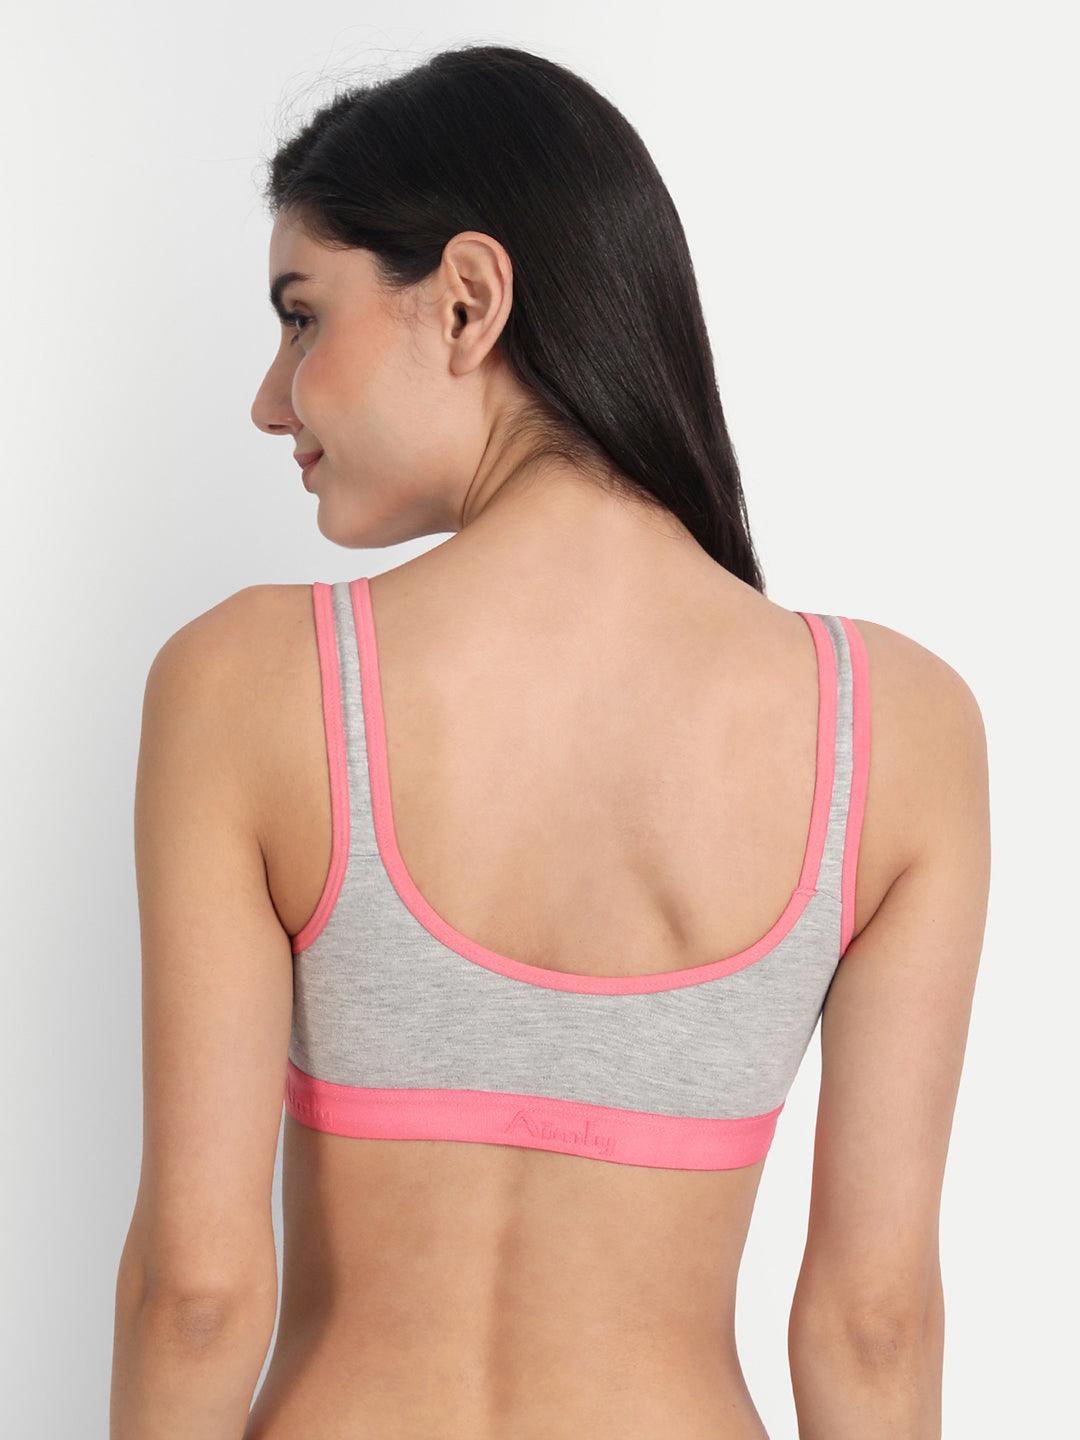 Buy Tweens Padded Non-Wired Full Coverage T-Shirt Bra - Dark Pink